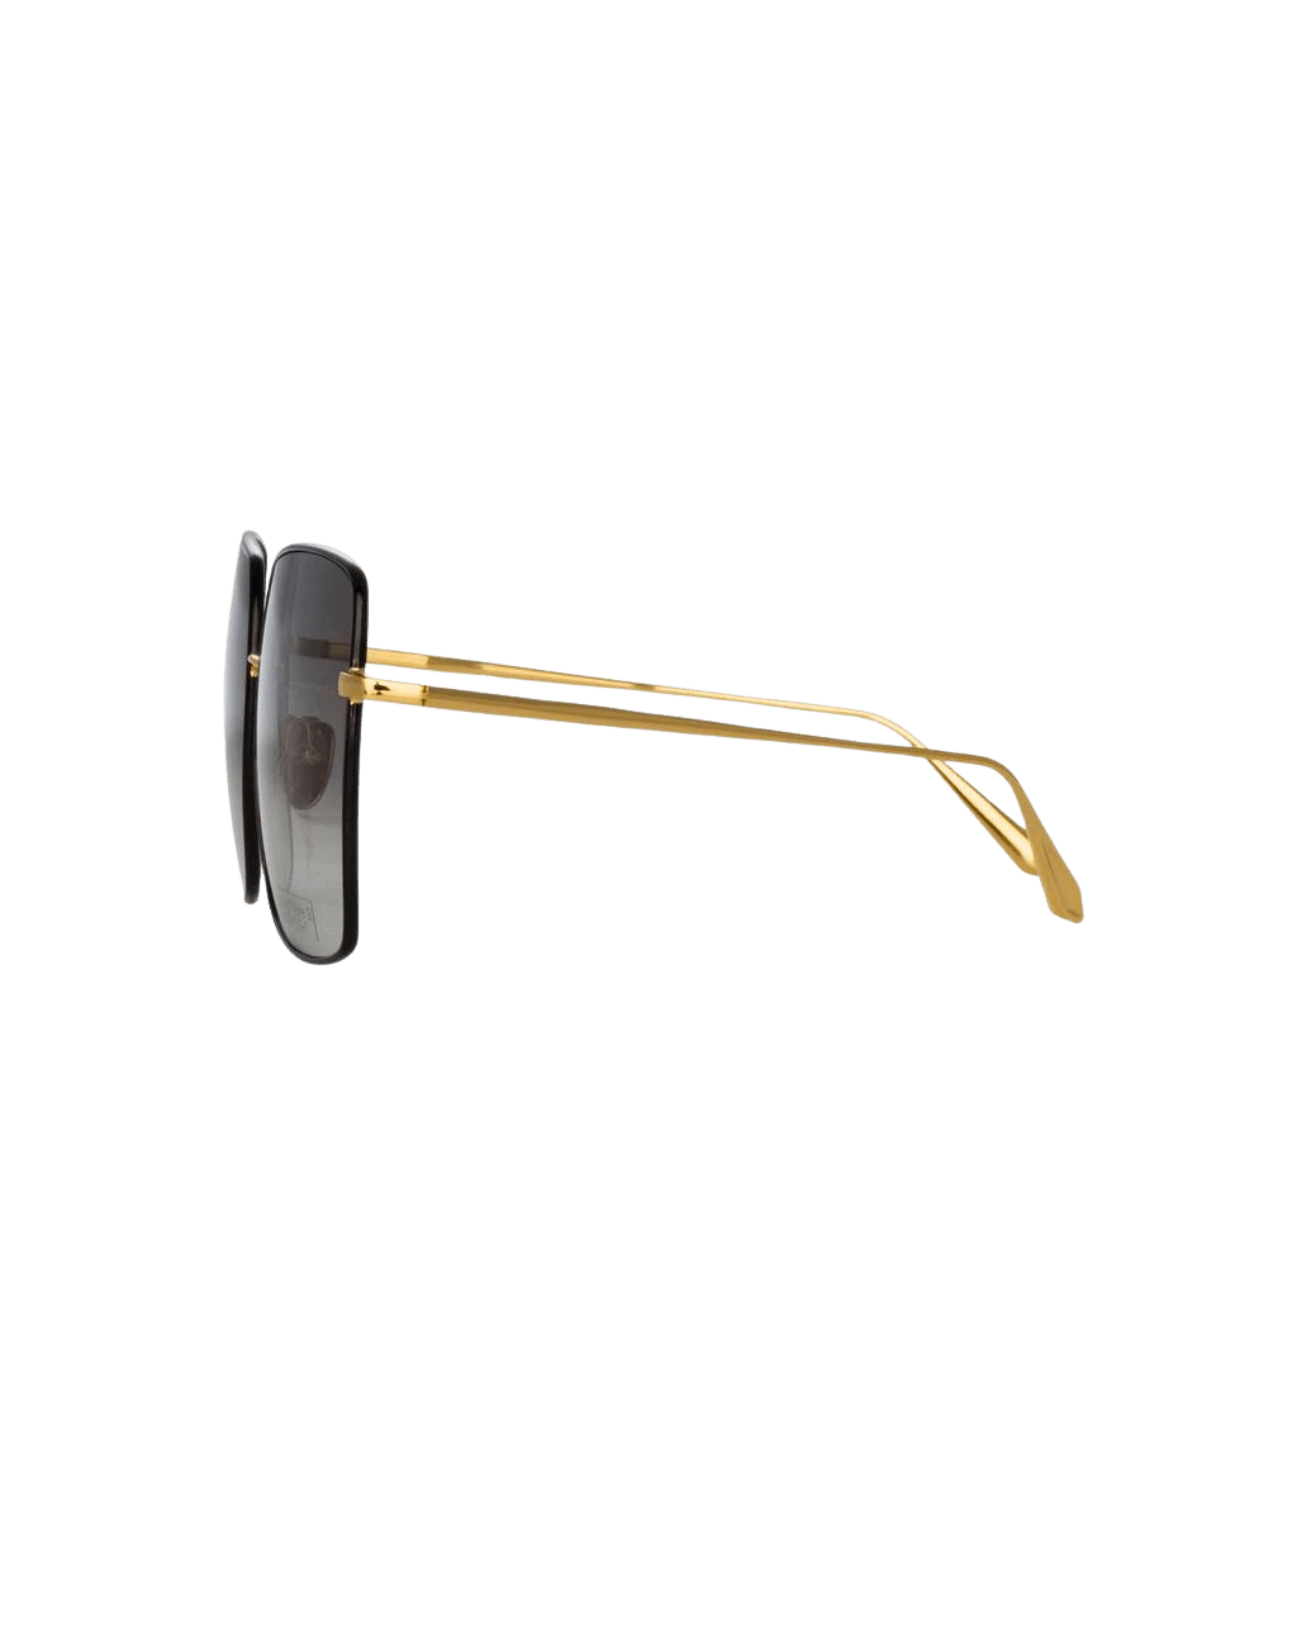 Linda Farrow - Eyewear - Sunglasses